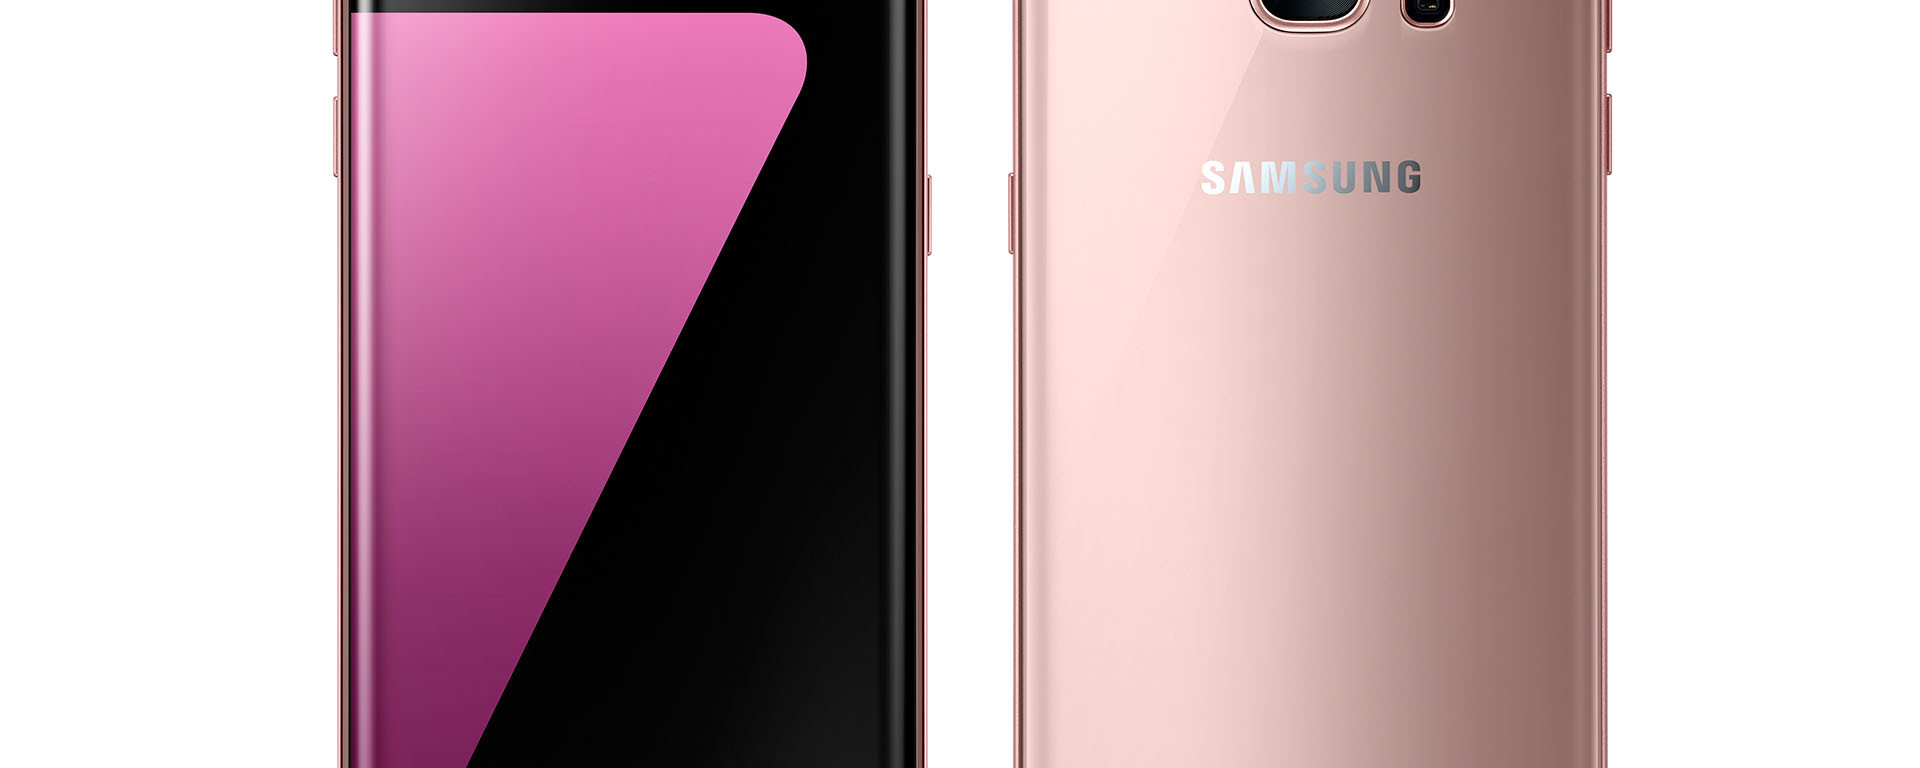 samsung-galaxy-s7-edge-pink-gold